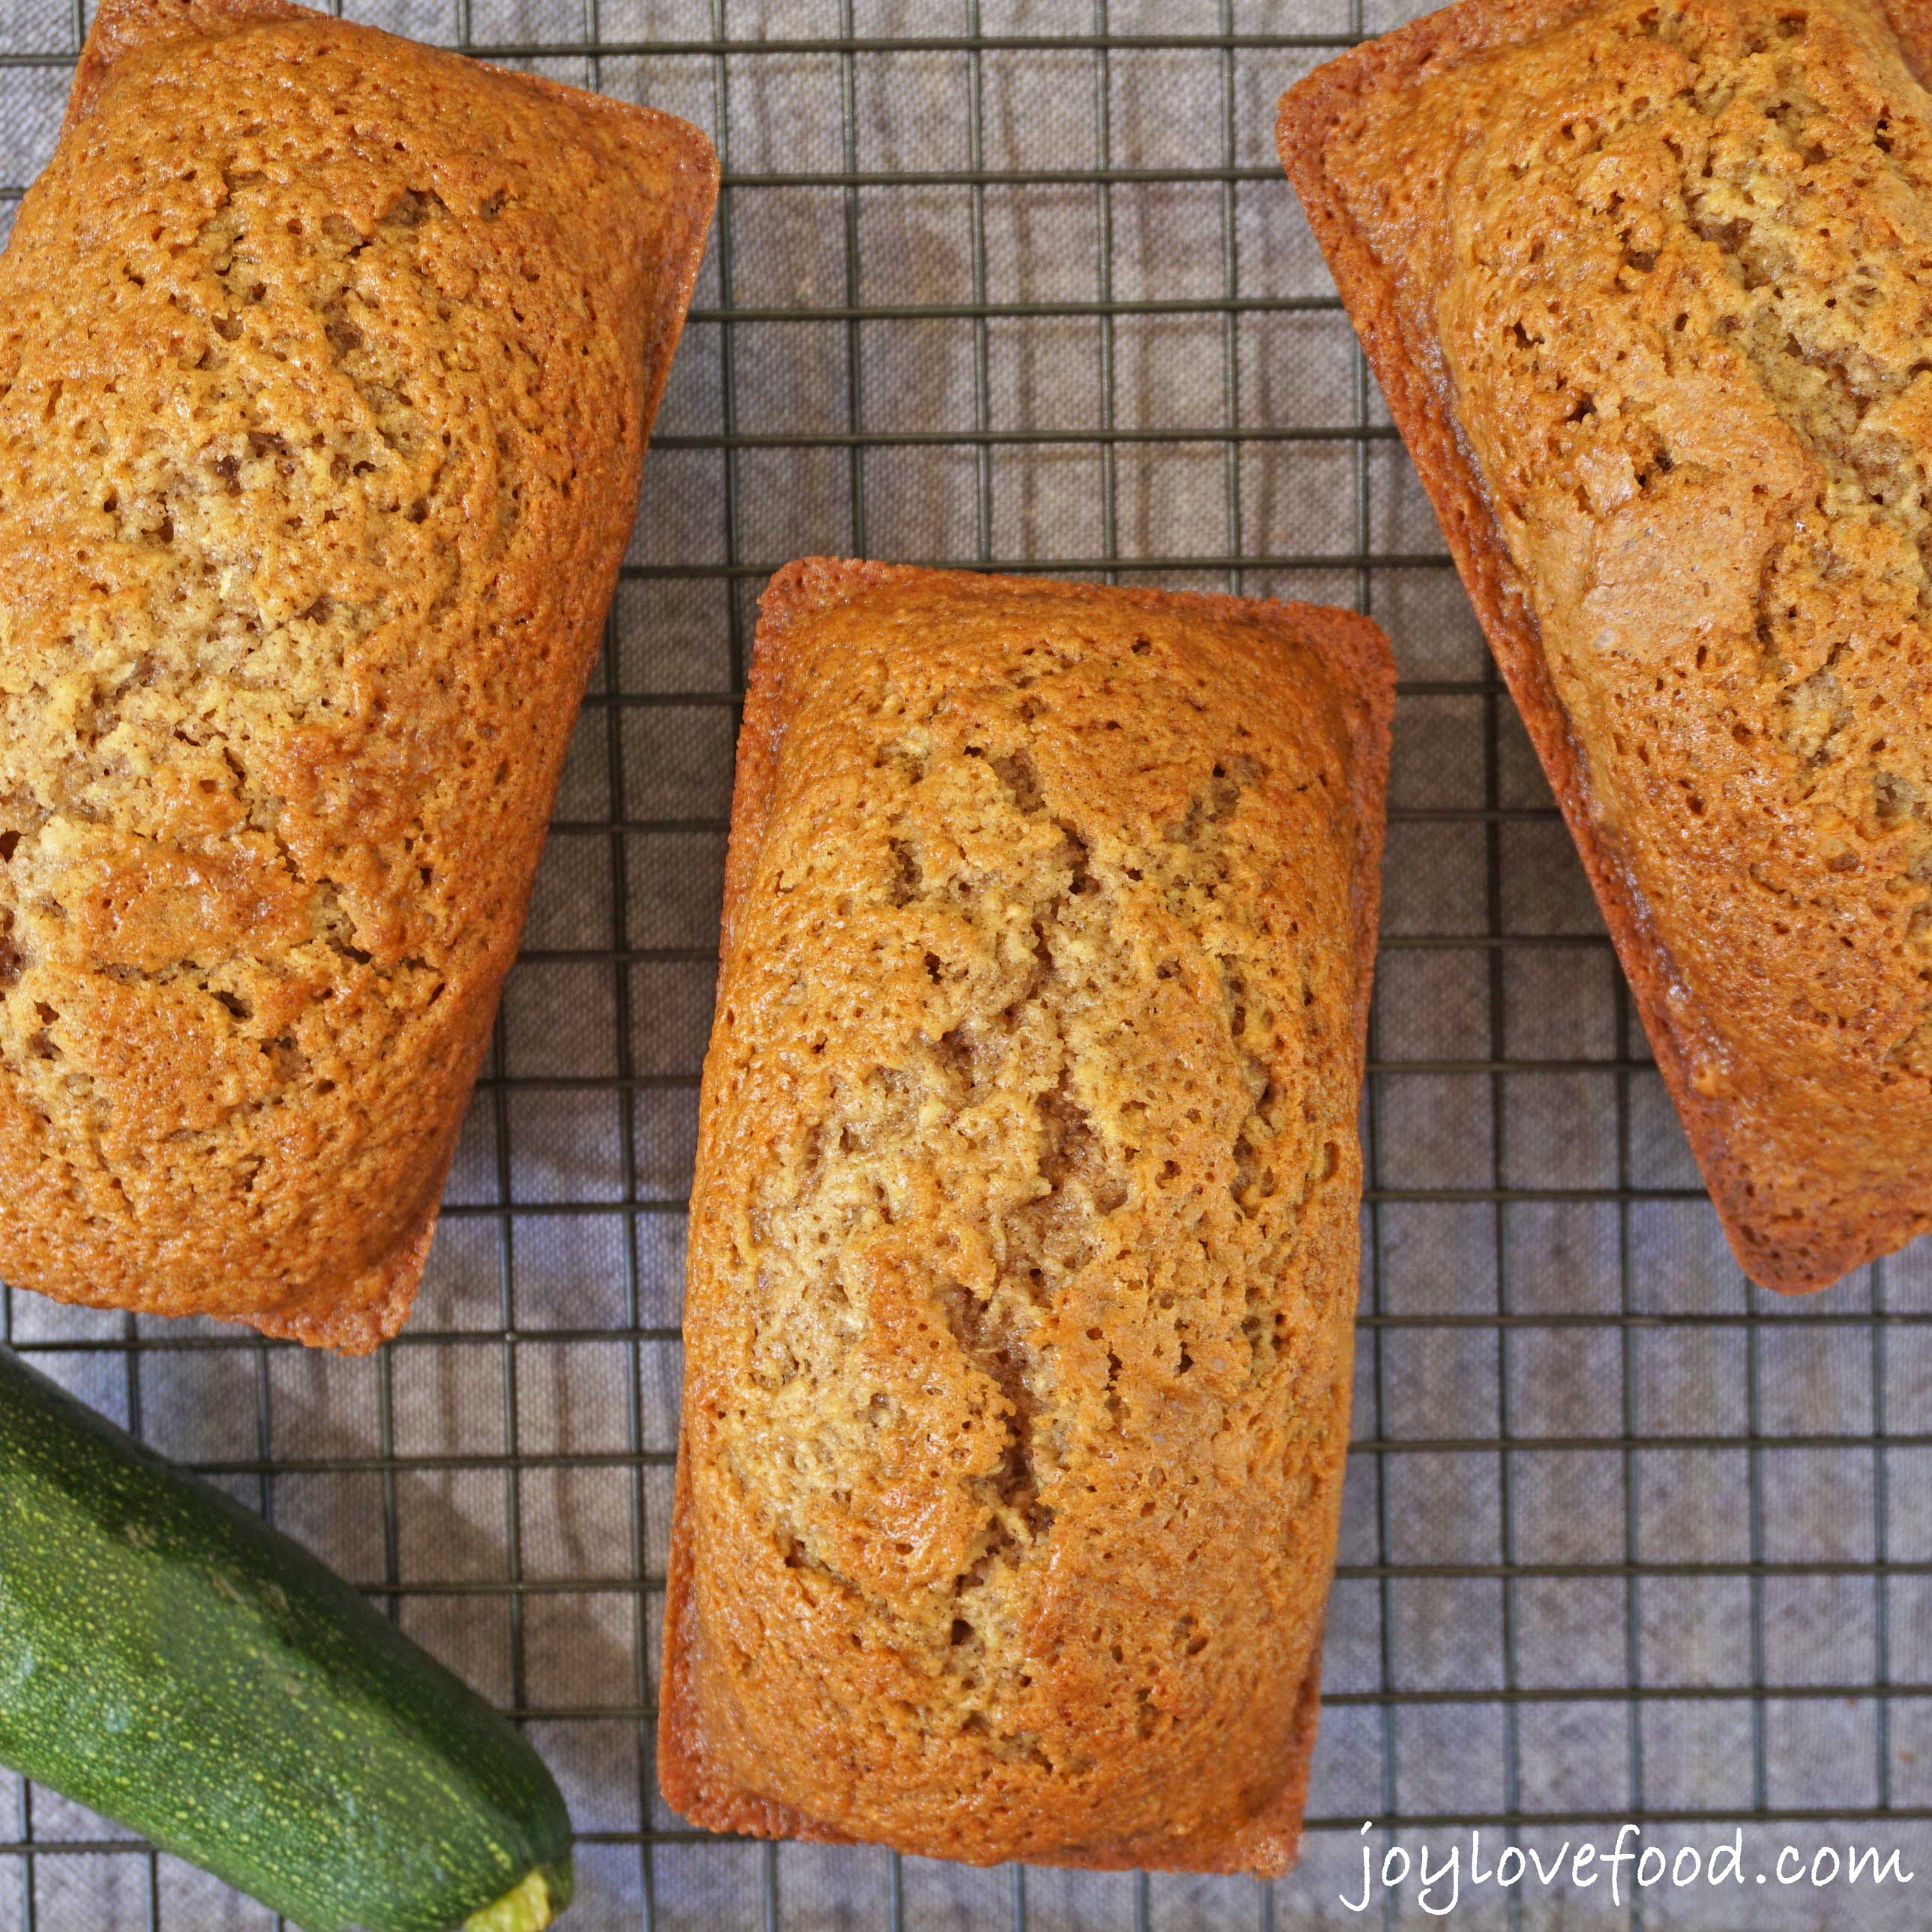 https://joylovefood.com/wp-content/uploads/2015/08/Spiced-Zucchini-Bread-Mini-Loaves-3-1.jpg